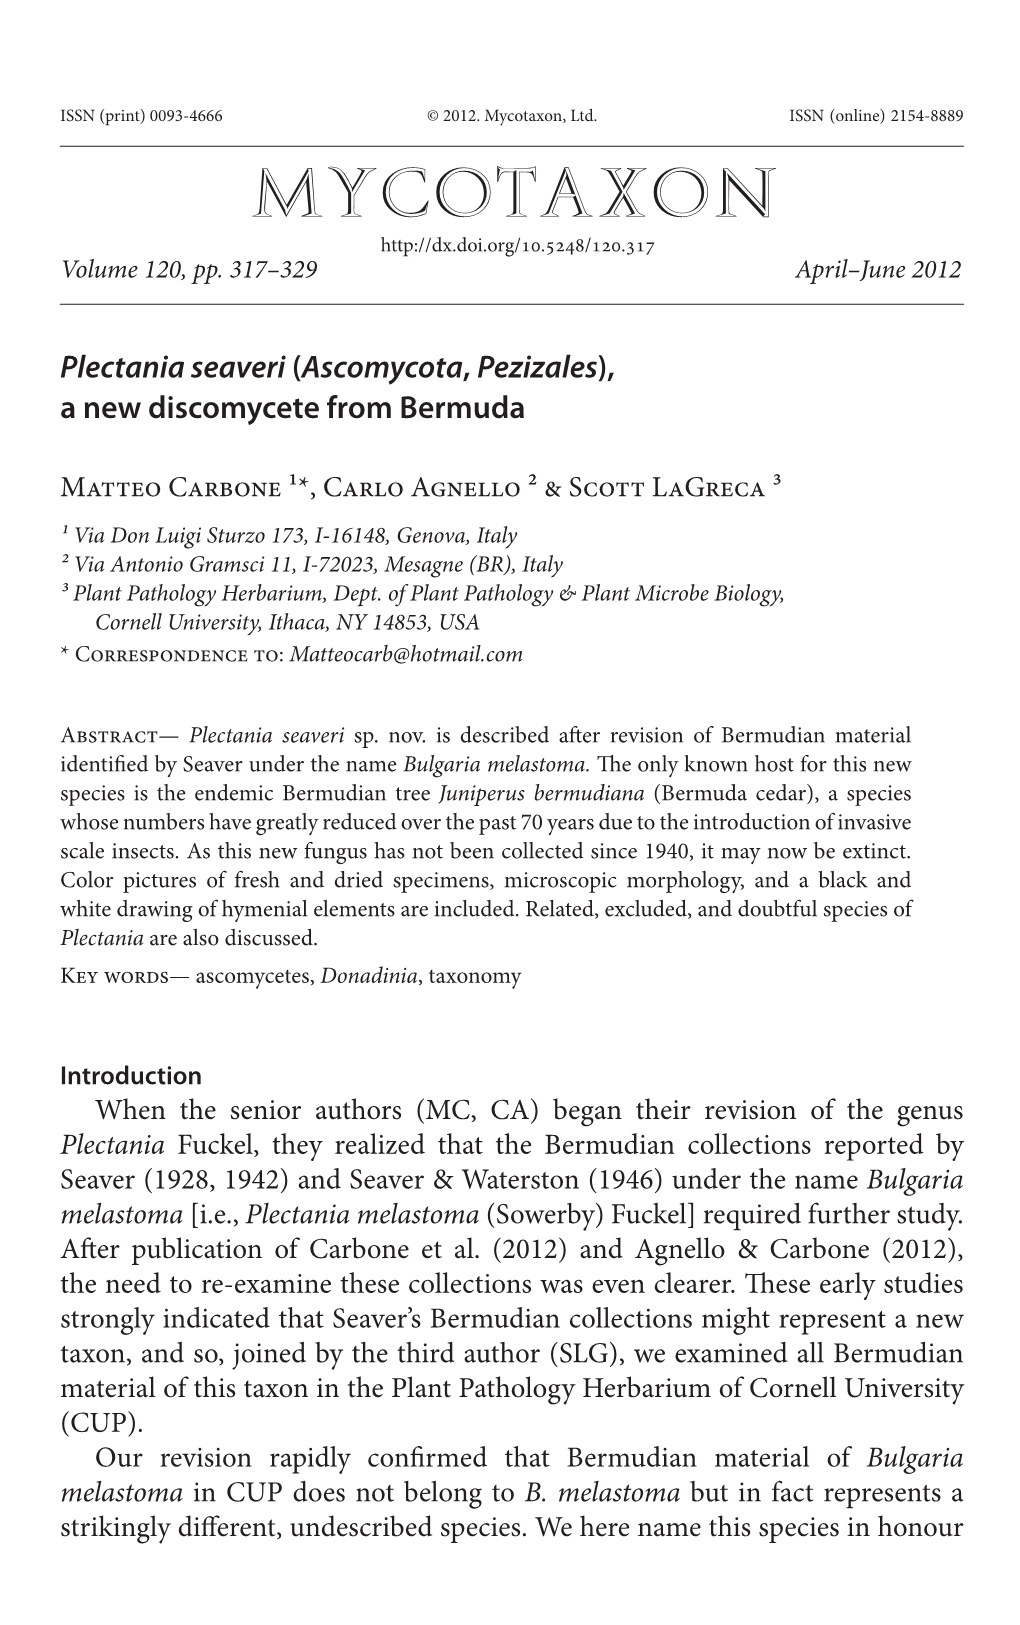 &lt;I&gt;Plectania Seaveri&lt;/I&gt; (&lt;I&gt;Ascomycota&lt;/I&gt;, &lt;I&gt;Pezizales&lt;/I&gt;), a New Discomycete from Bermu